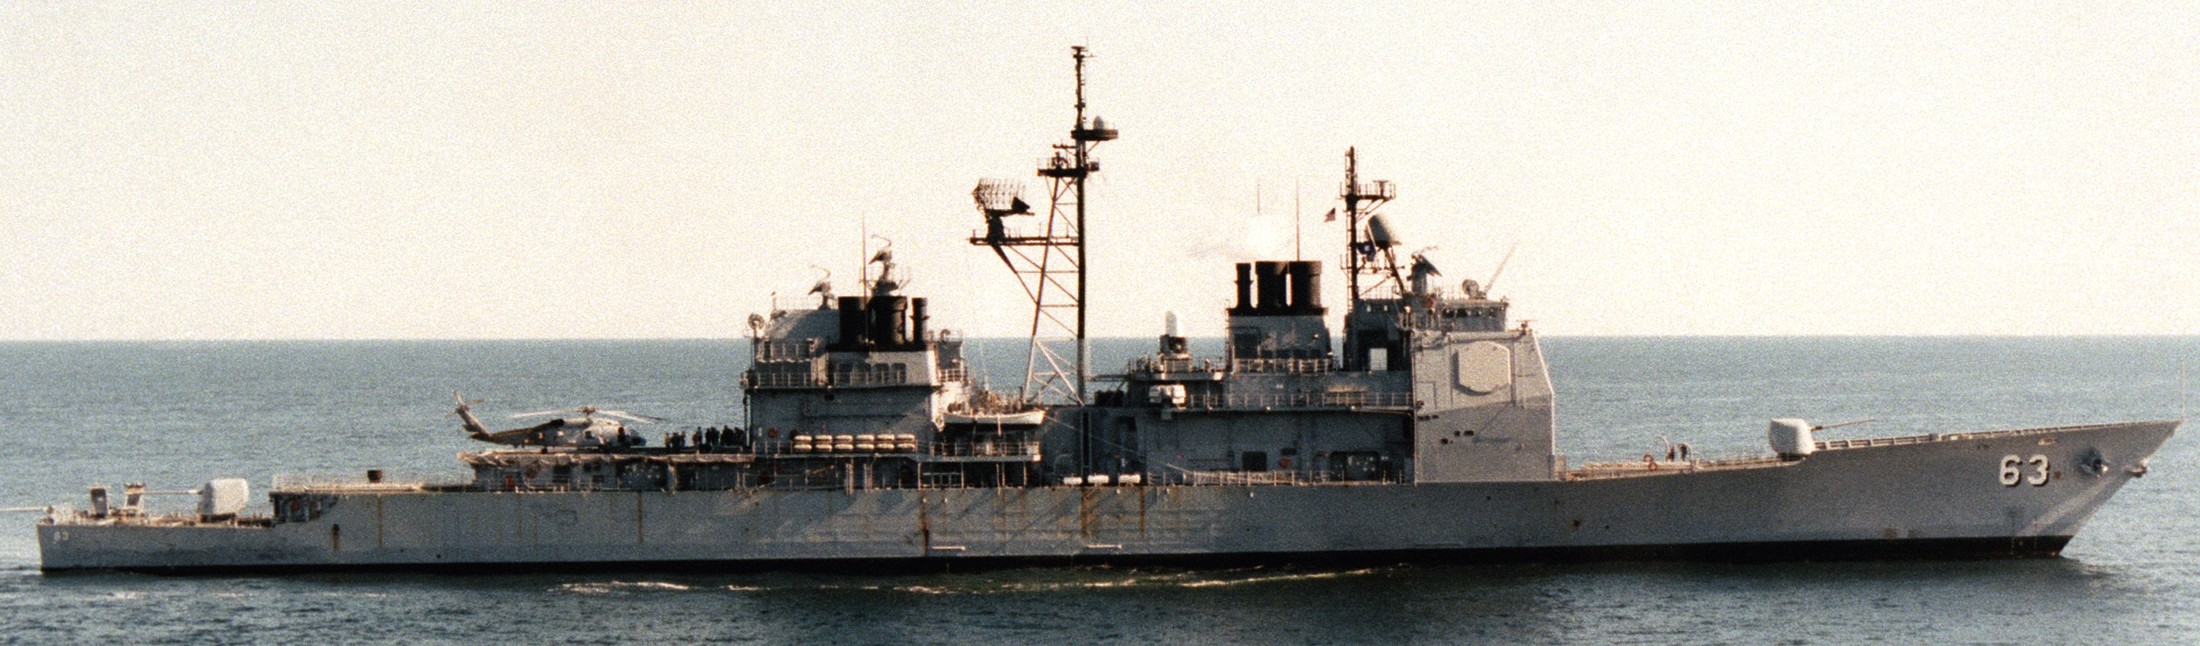 cg-63 uss cowpens ticonderoga class guided missile cruiser aegis us navy sea trials 84